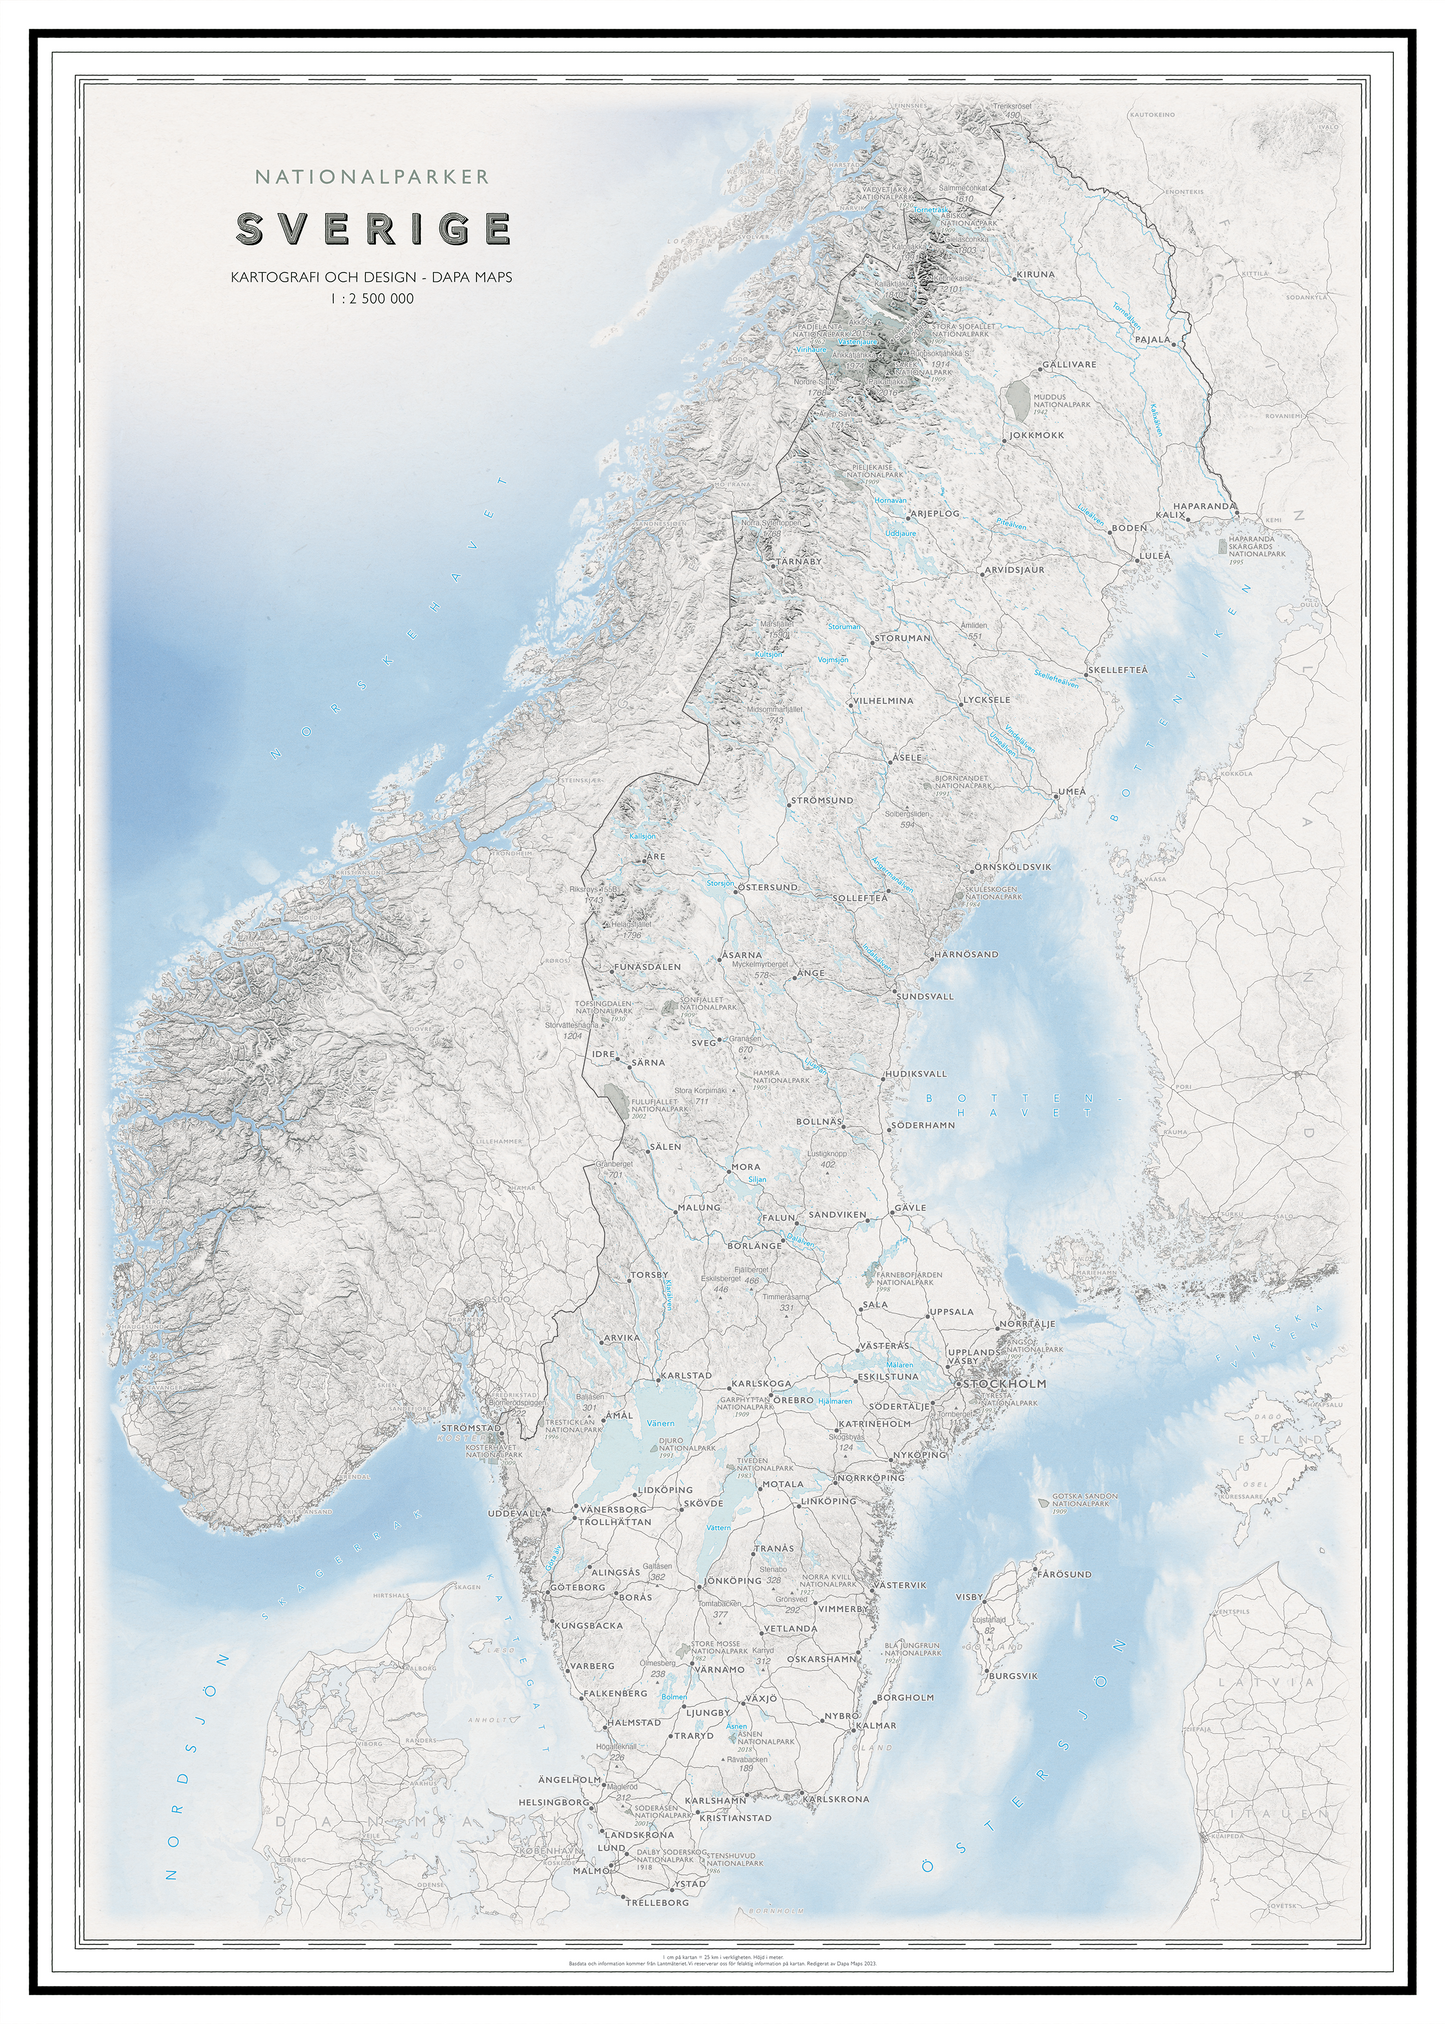 Sverigekarta med nationalparker